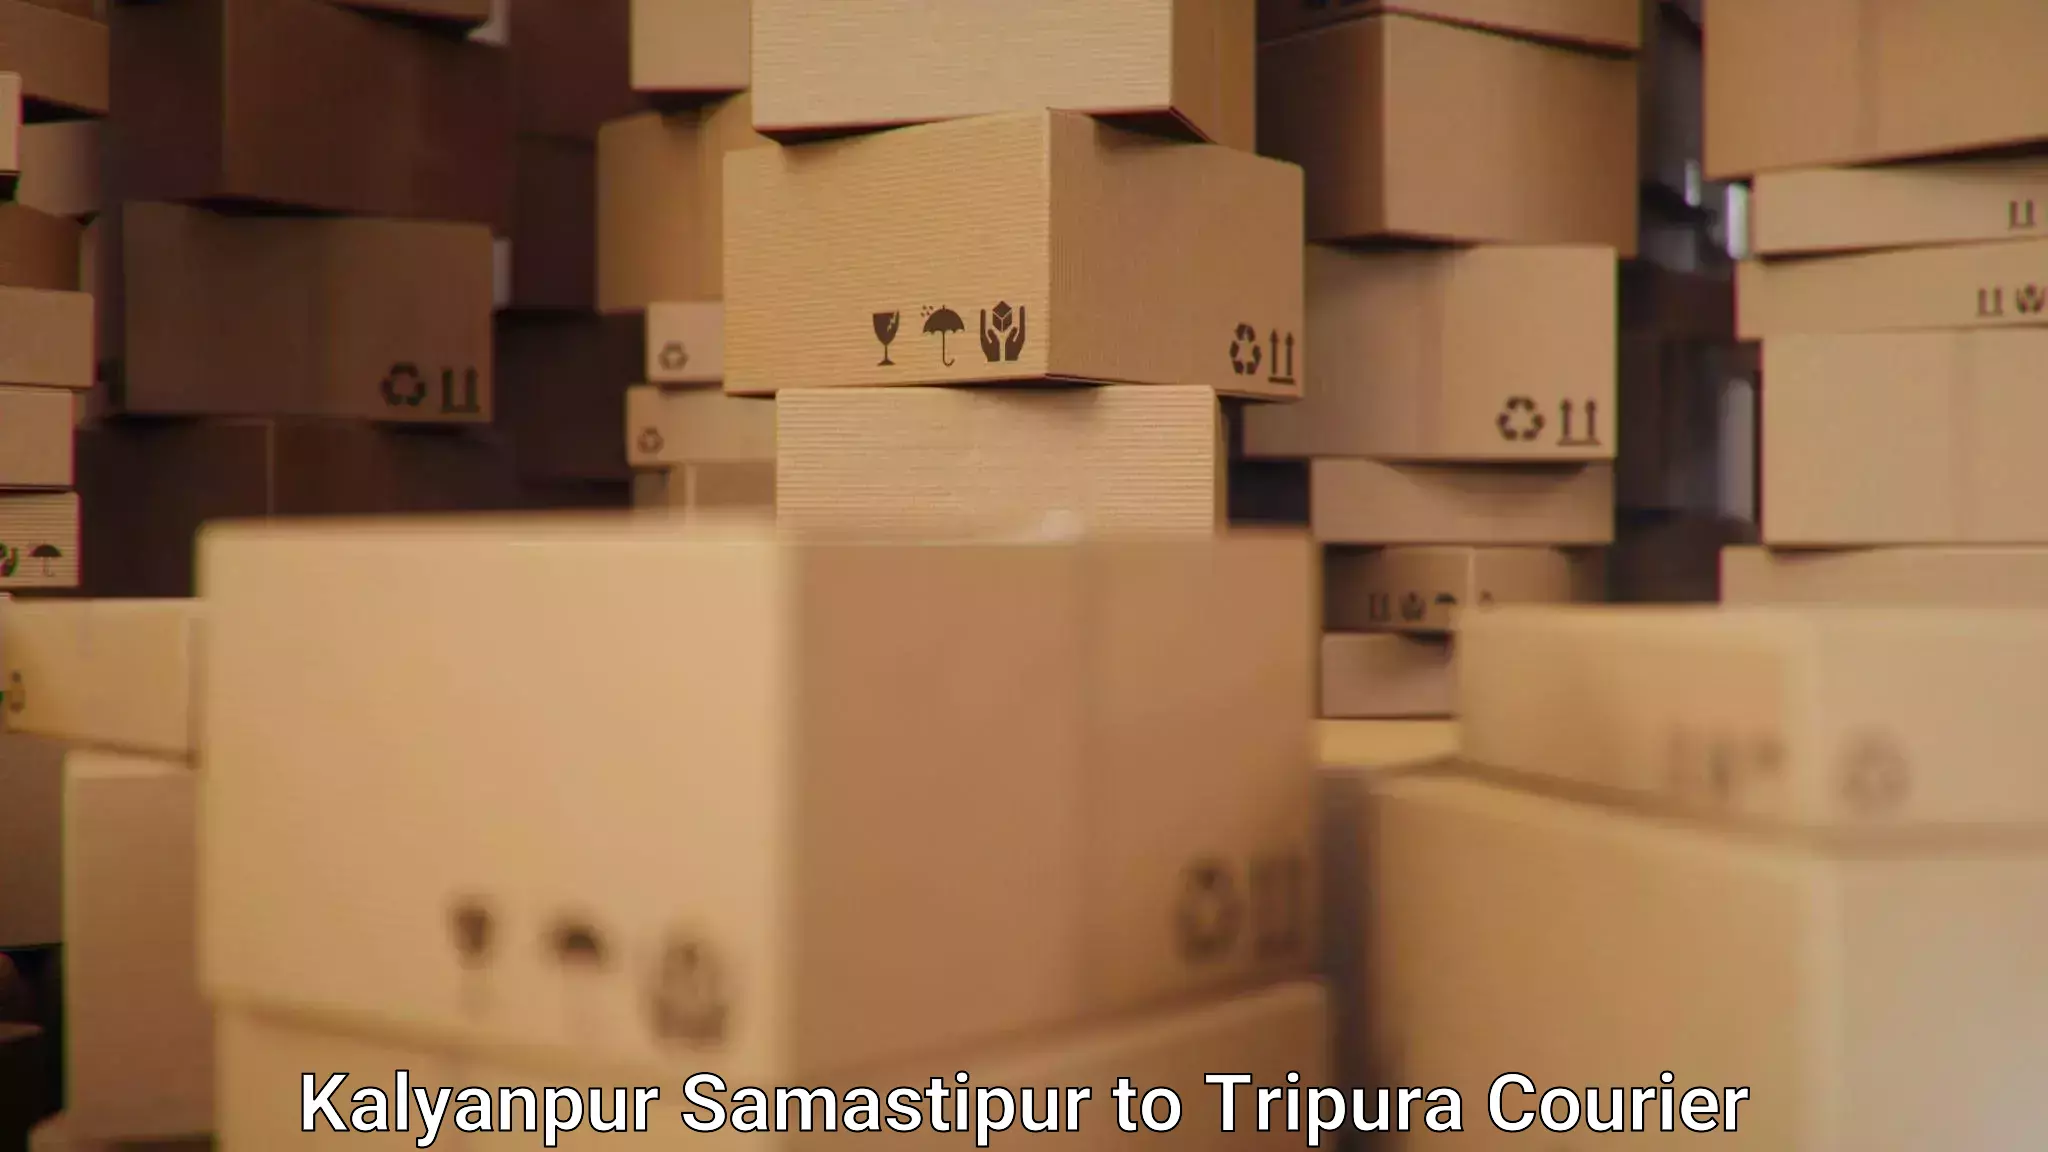 24/7 courier service in Kalyanpur Samastipur to Udaipur Tripura